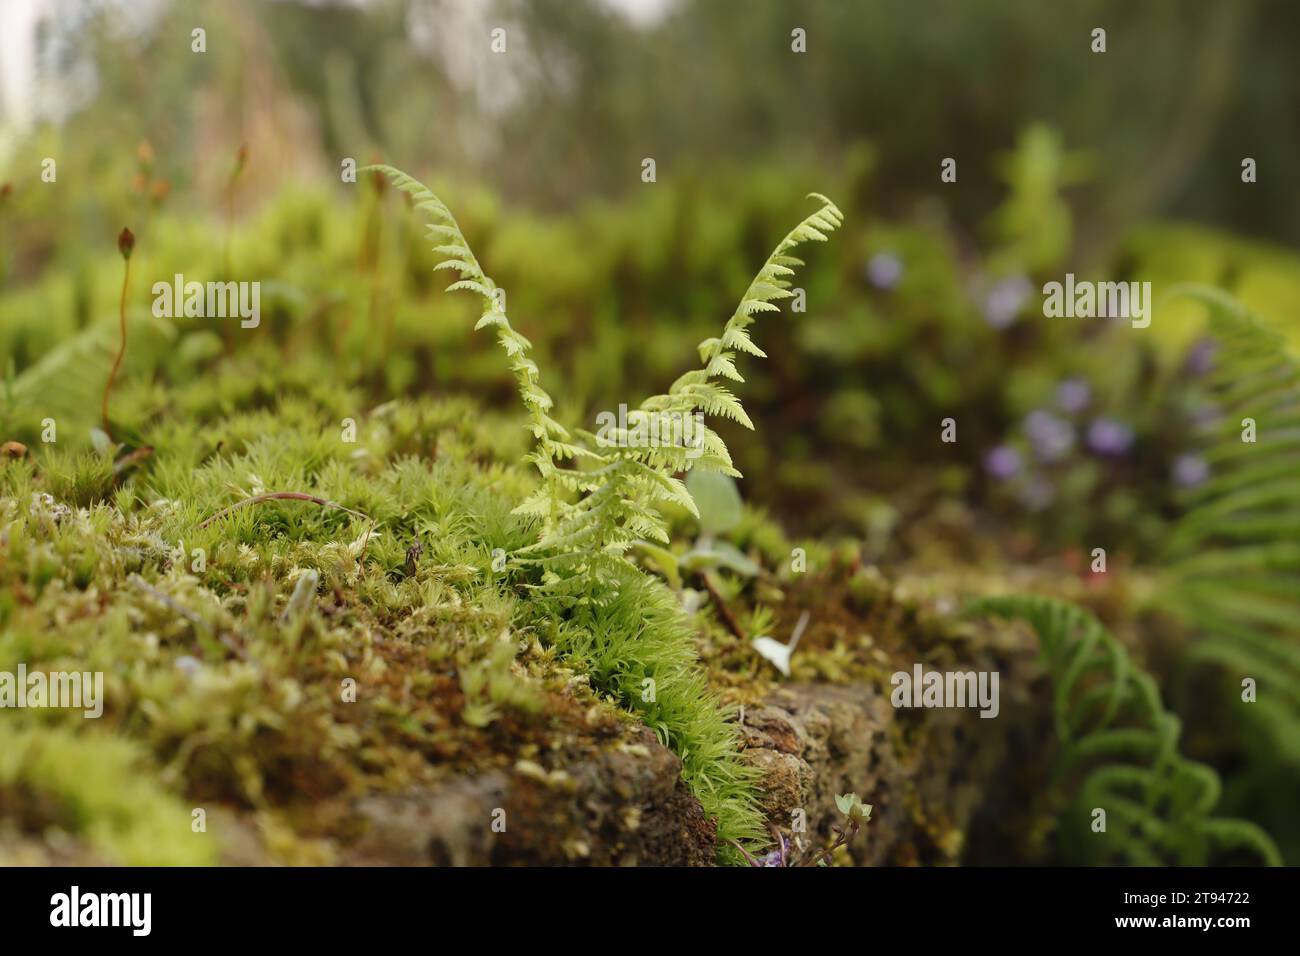 Fern grows on moss Stock Photo